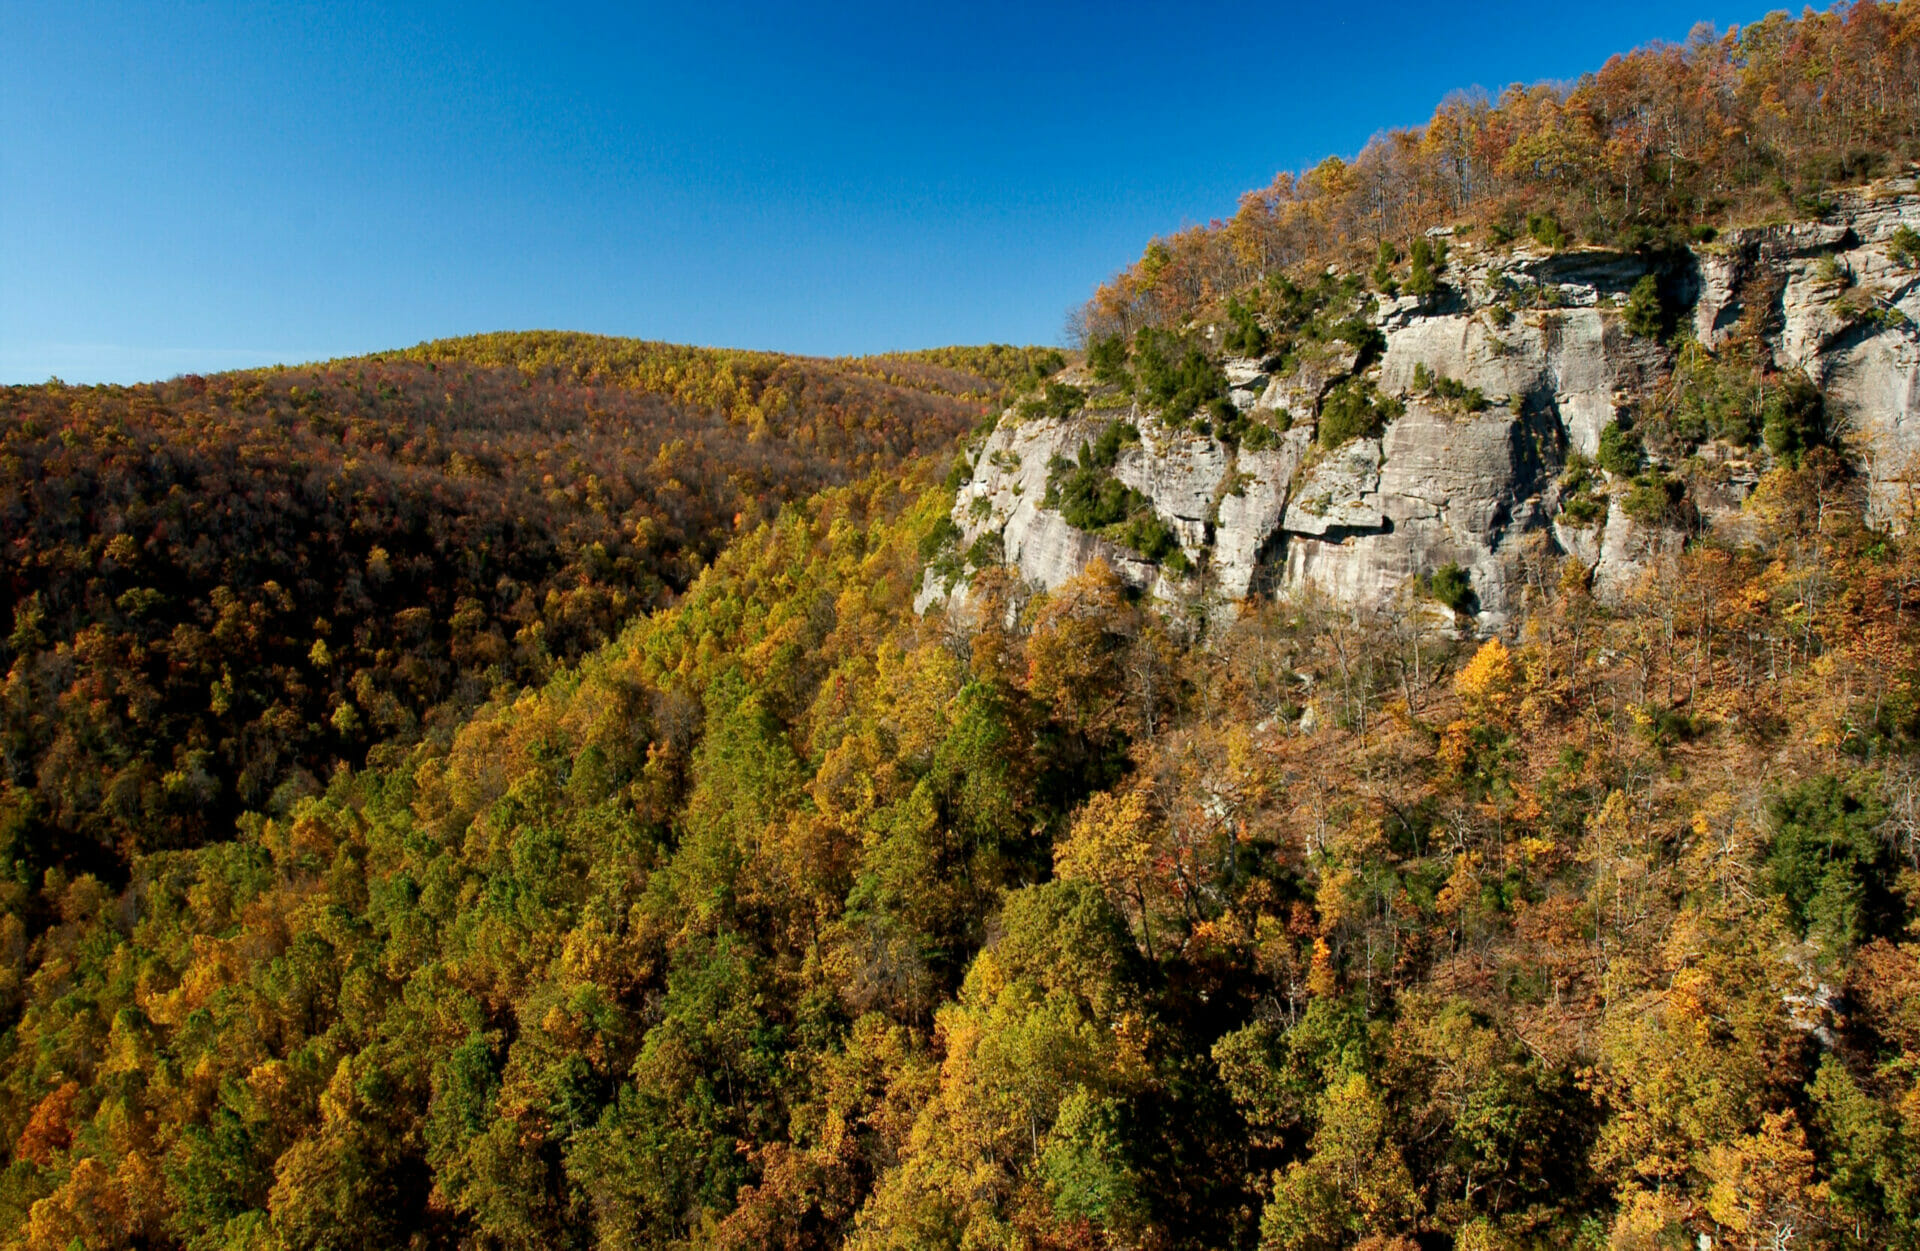 Western North Carolina mountain views with fall foliage